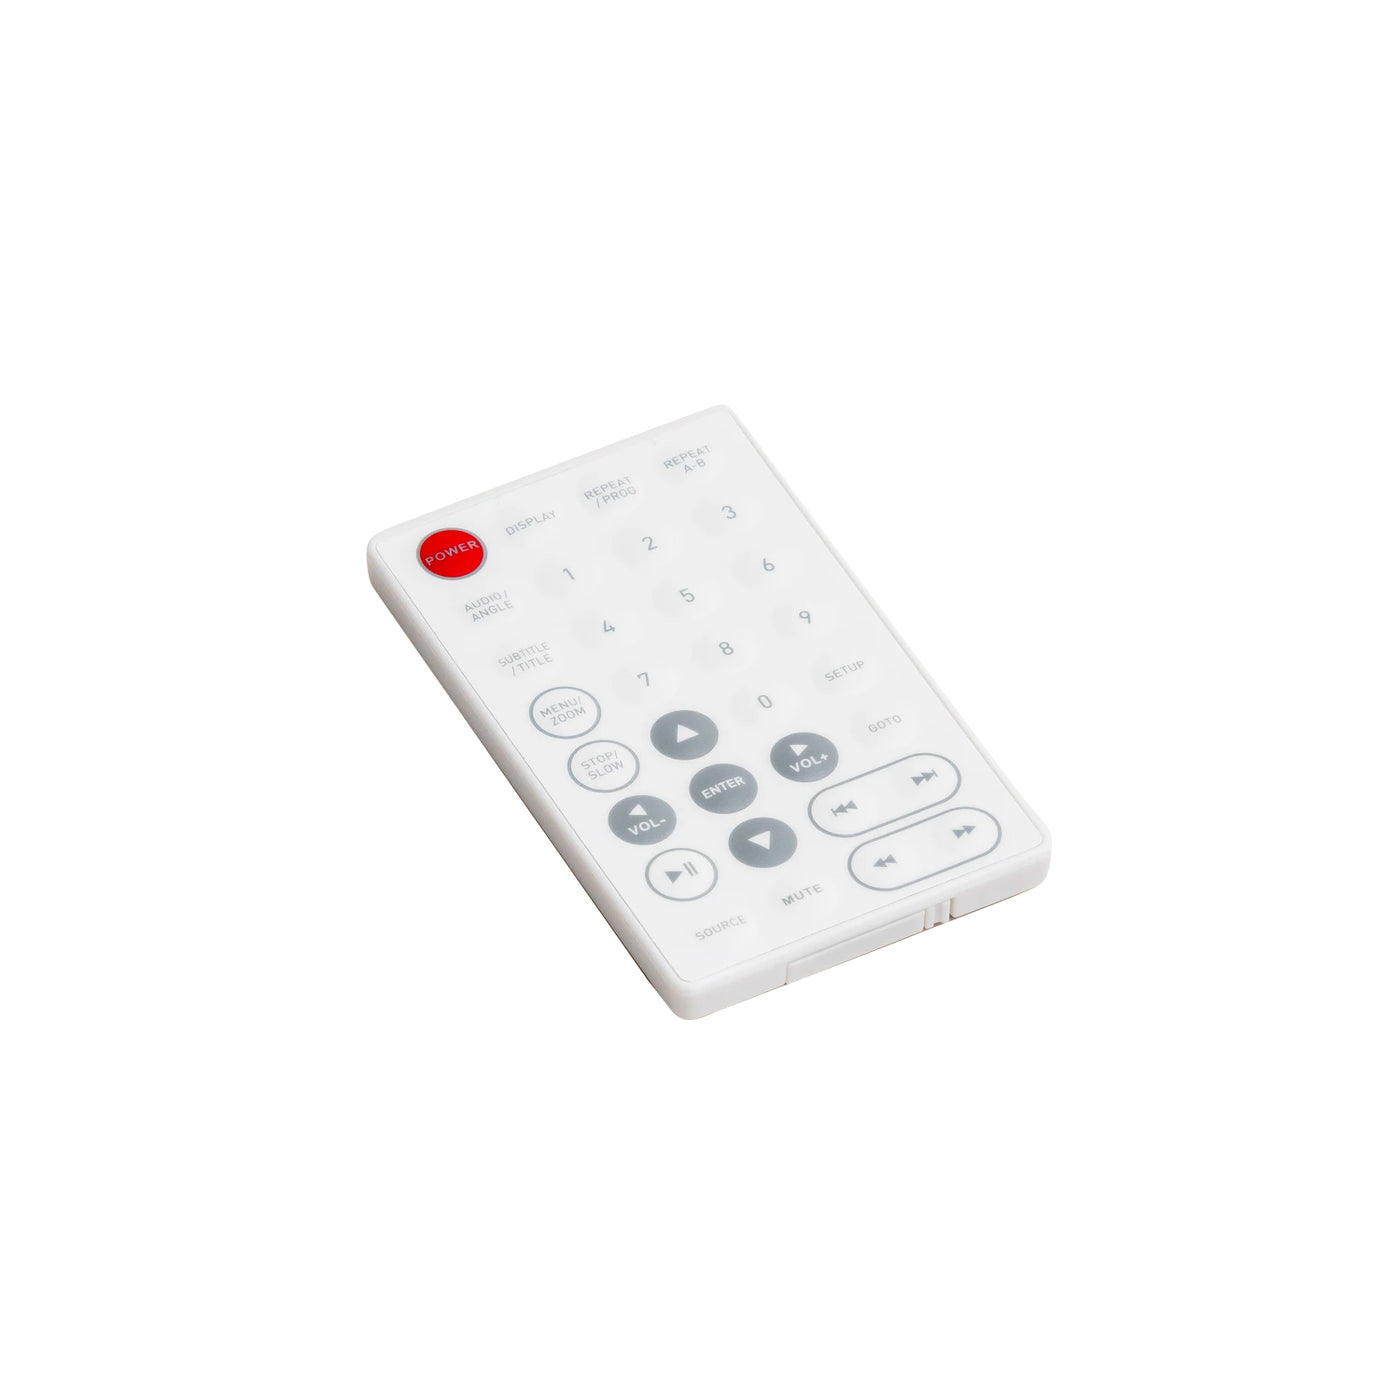 Remote control DVP-740 - B for DVP-740X2